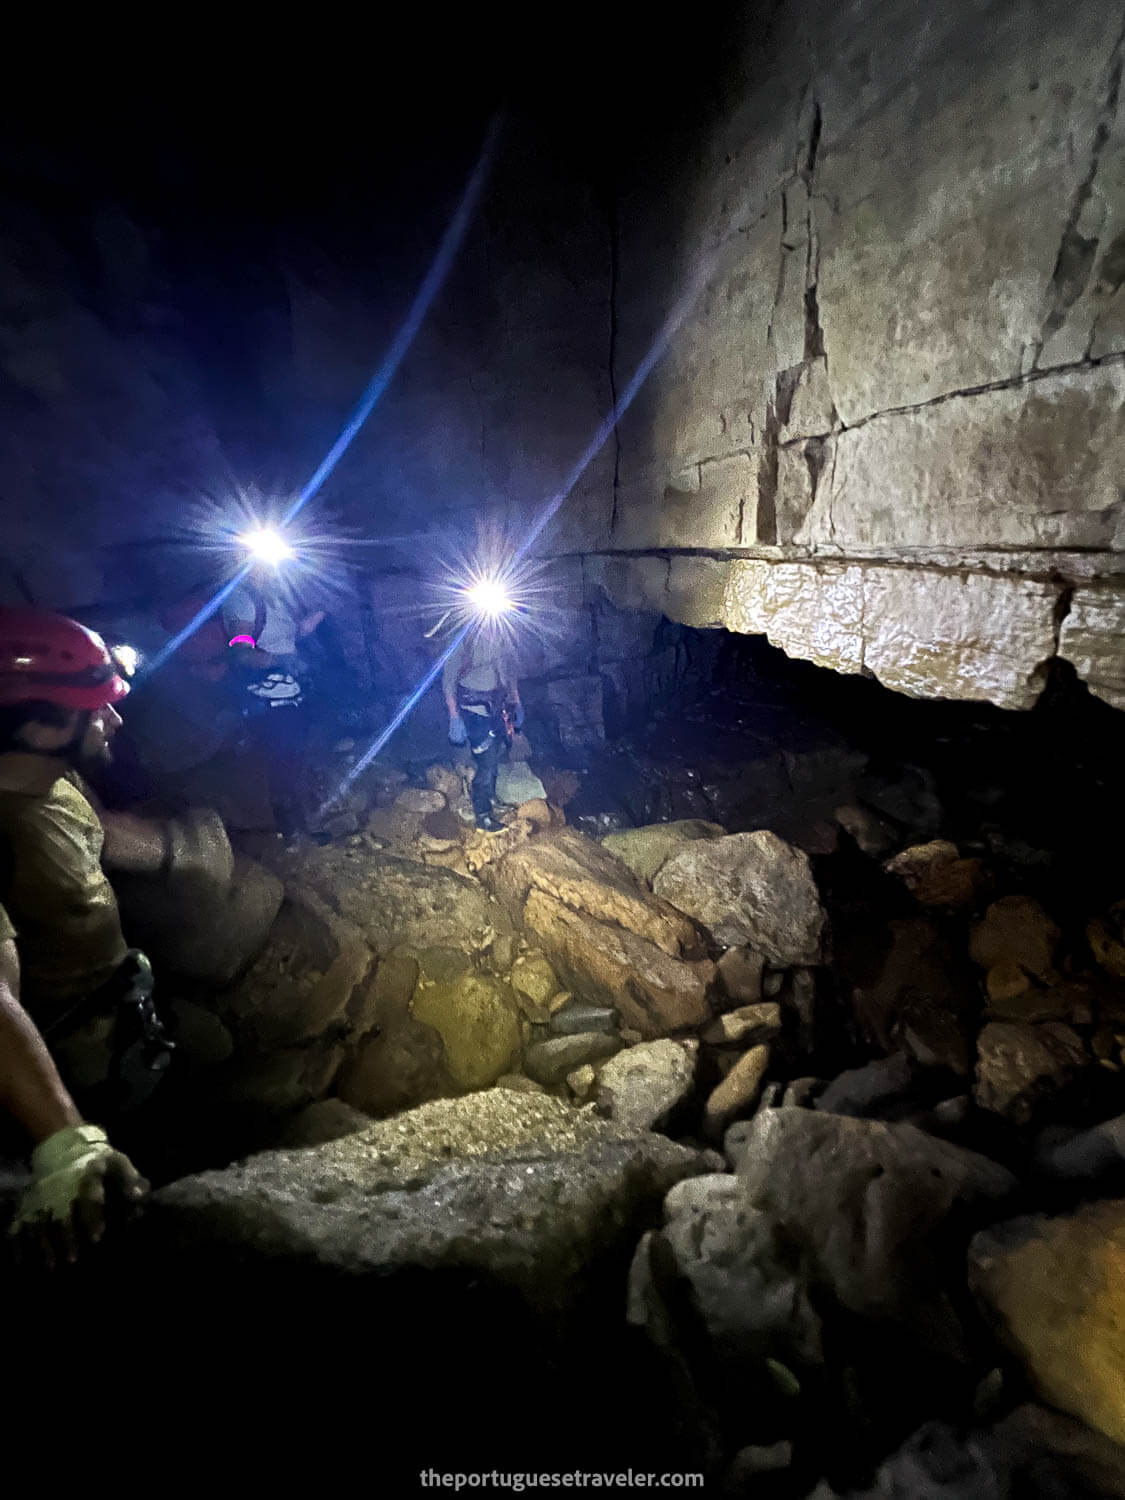 The famous Moricz Arch, on the Cueva de Los Tayos expedition.